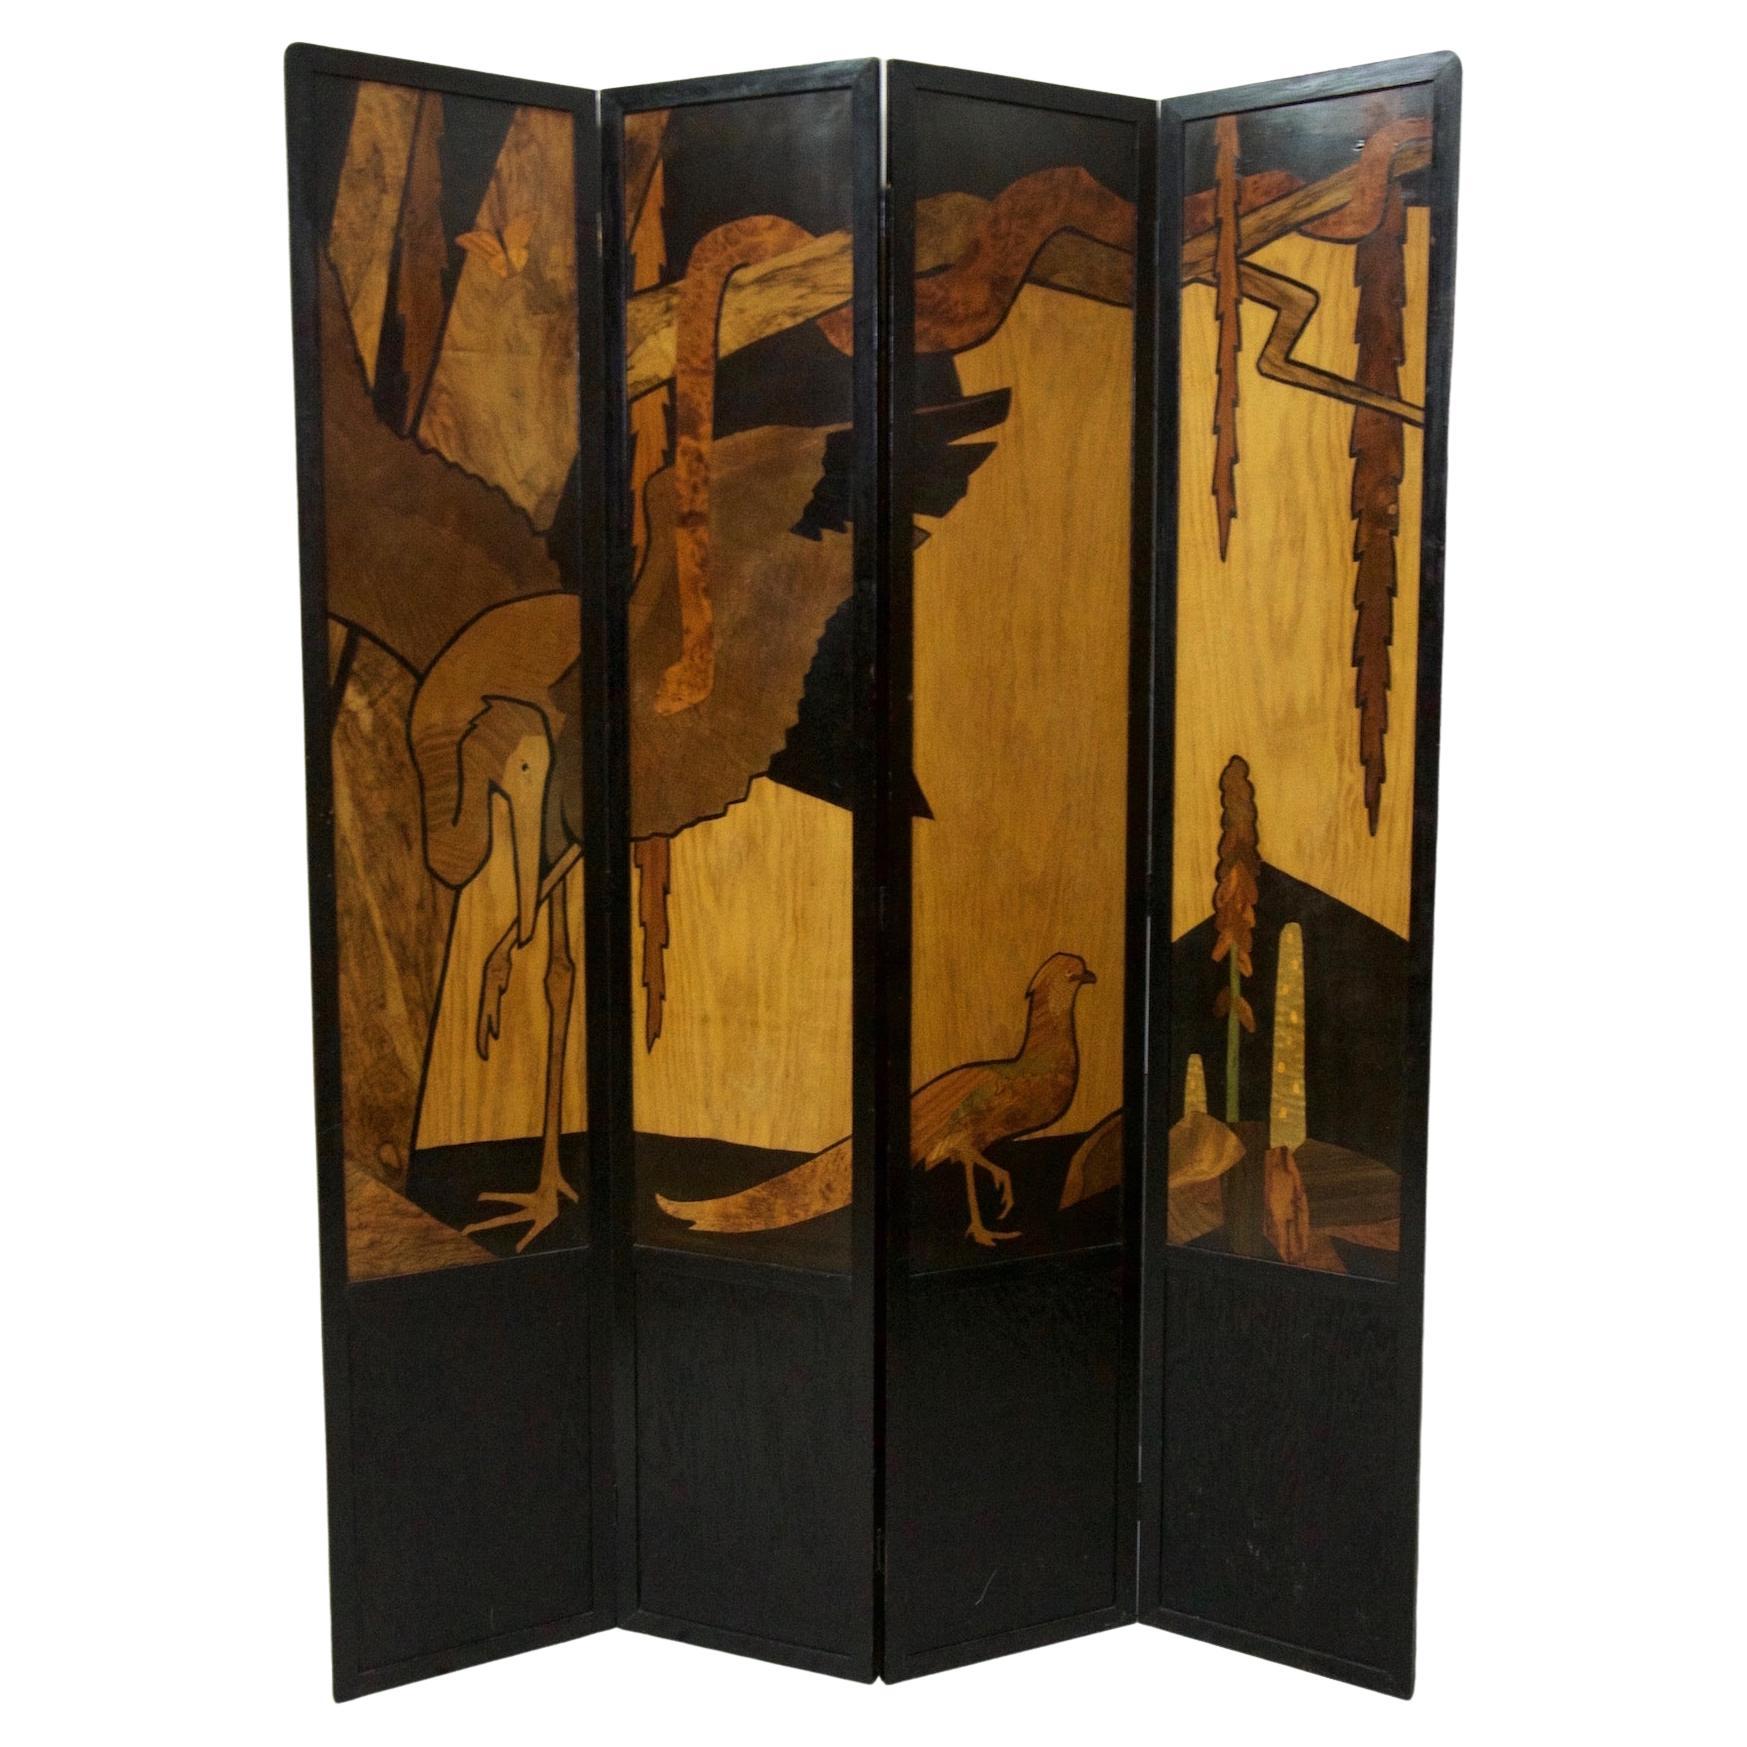 Rowley Gallery 4 Foldes Screen, 'the Jungle' von William Arthur Chase im Angebot